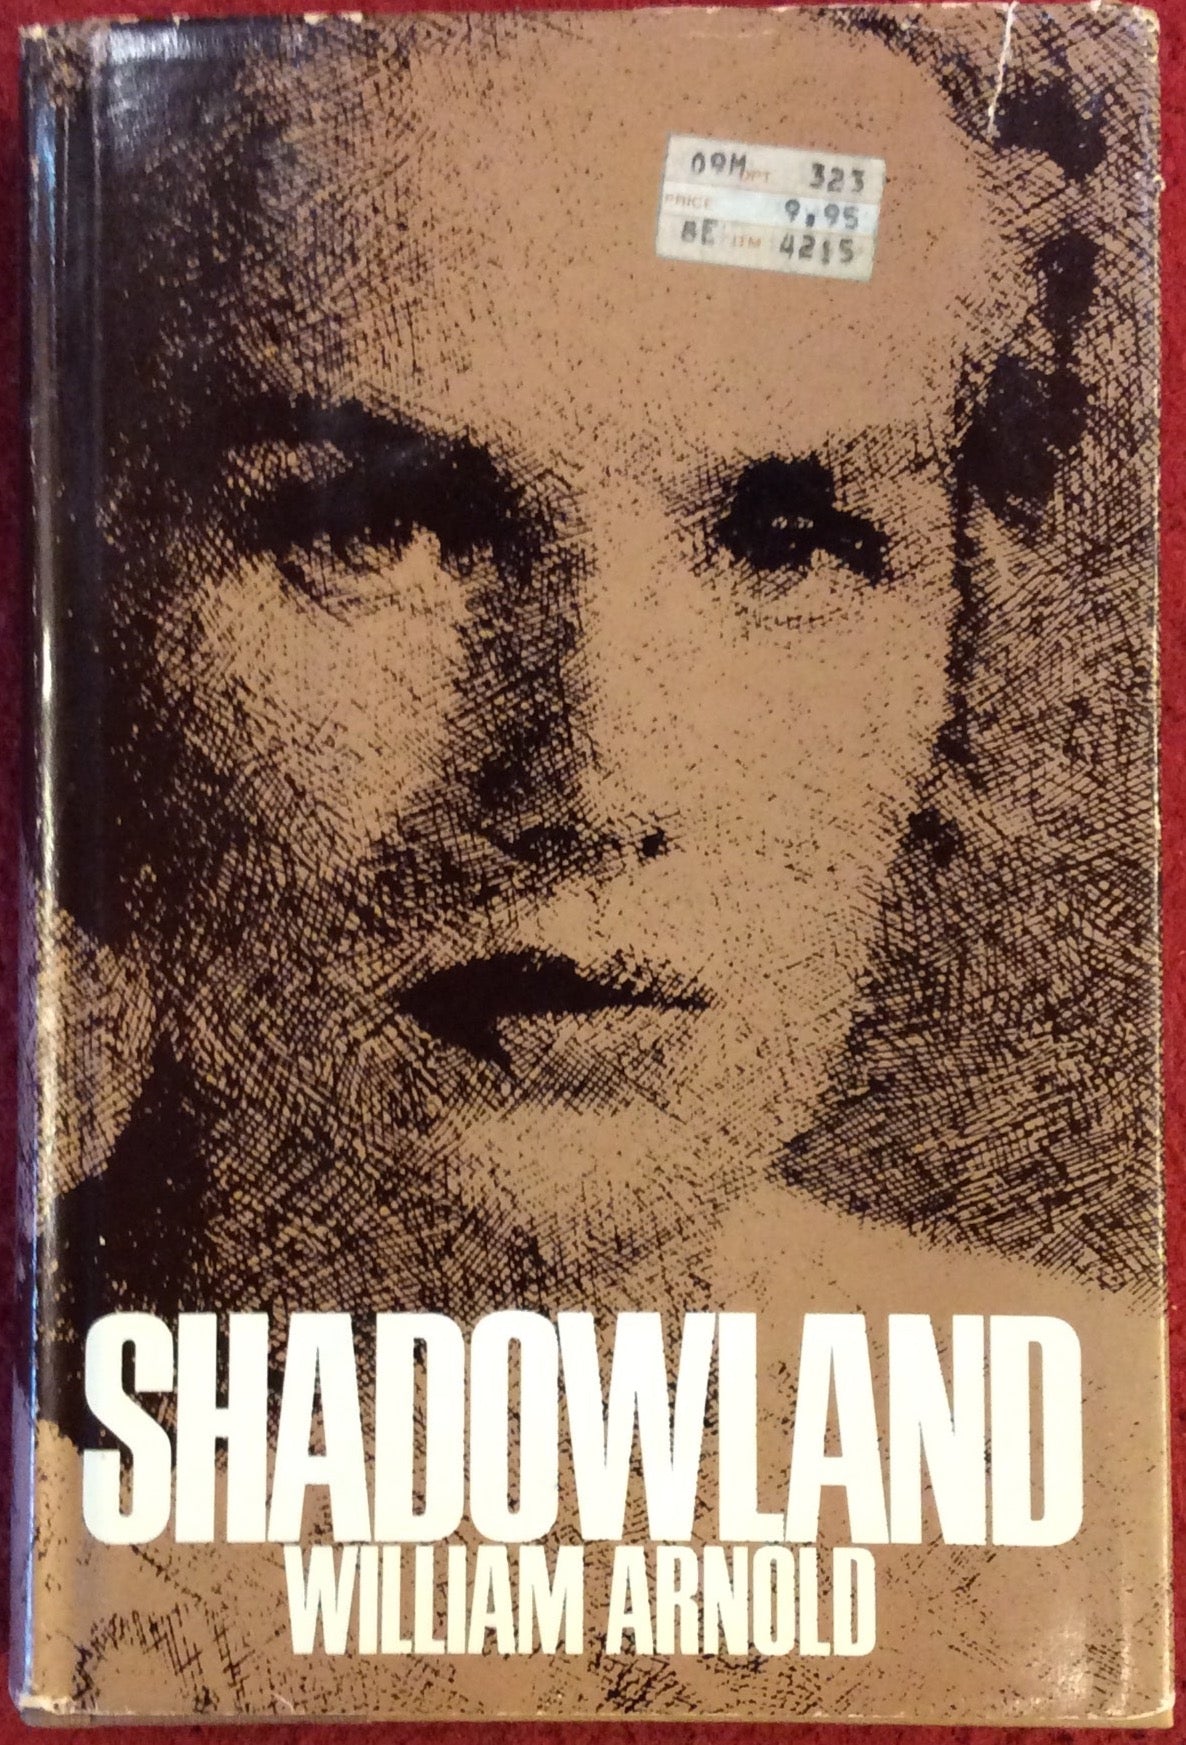 Shadowland, William Arnold, 1978, McGraw-Hill *